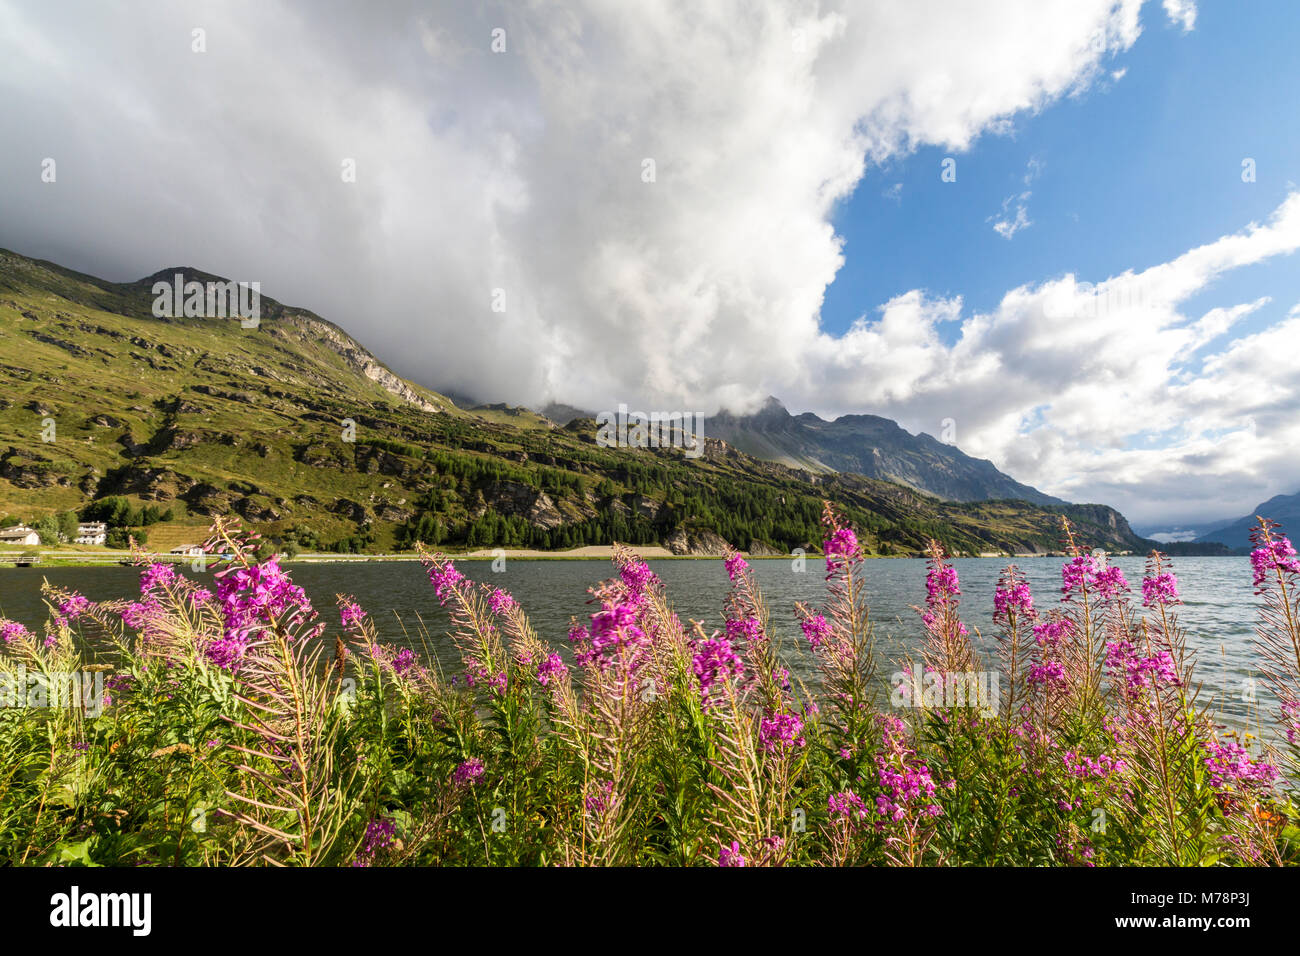 Epilobium wildflowers on lakeshore, Maloja Pass, Bregaglia Valley, Engadine, Canton of Graubunden (Grisons), Switzerland, Europe Stock Photo